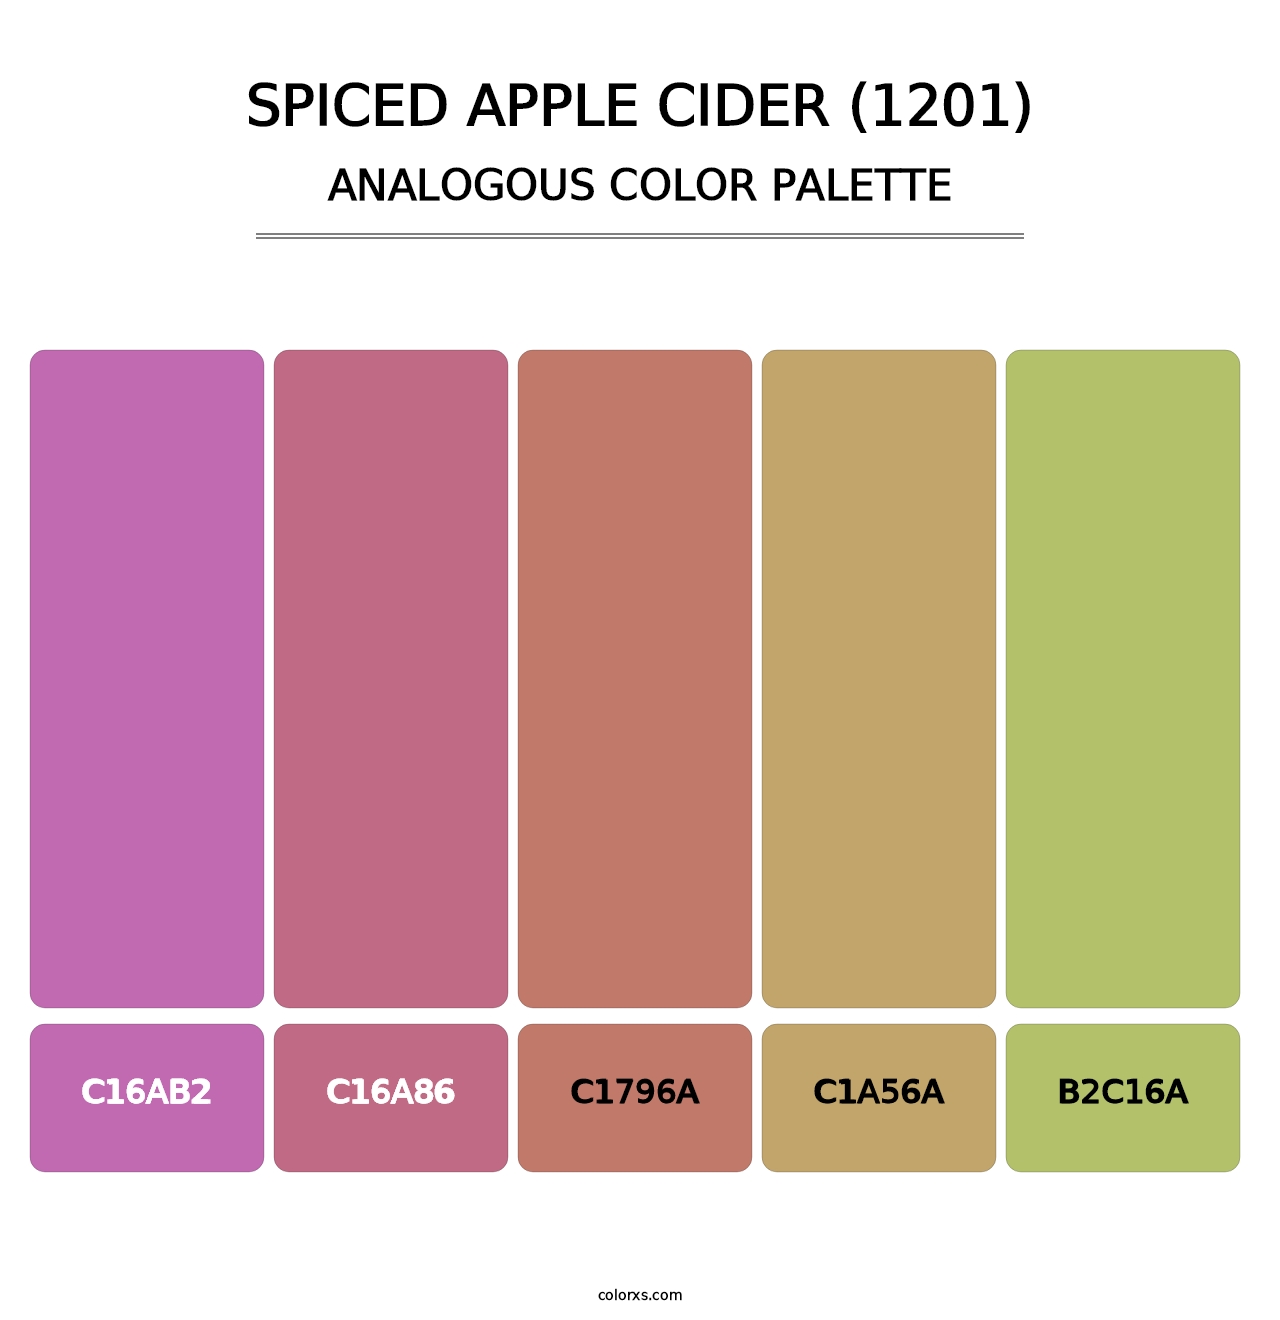 Spiced Apple Cider (1201) - Analogous Color Palette